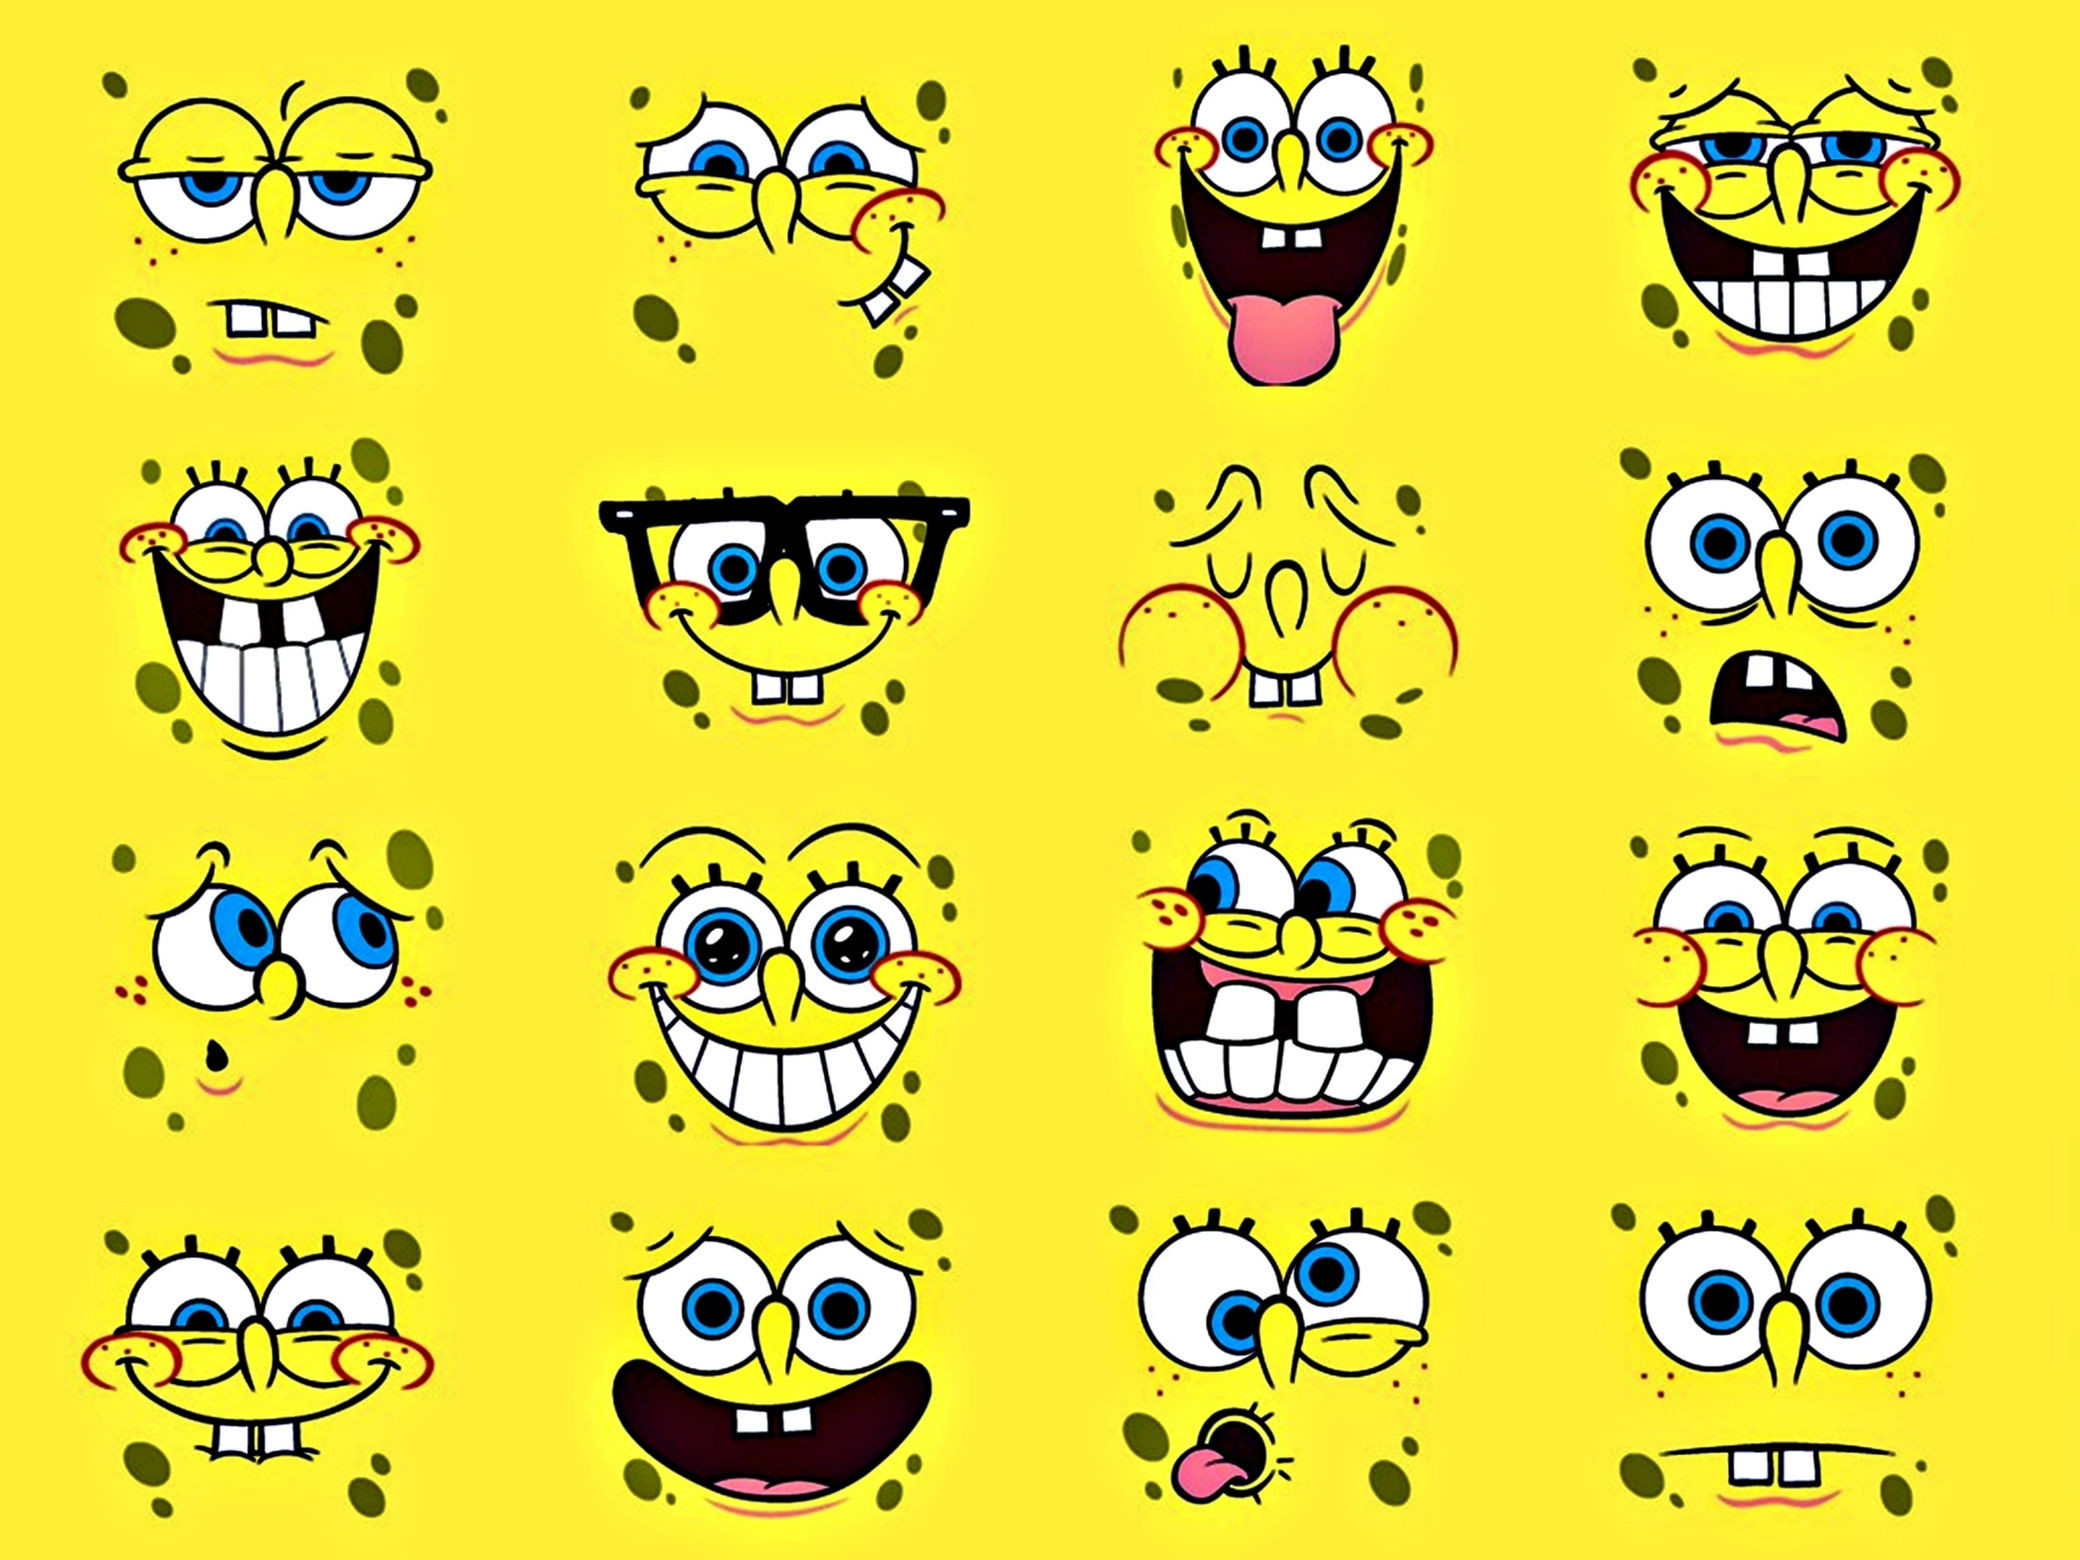 Spongebob Squarepants Anime version  9GAG